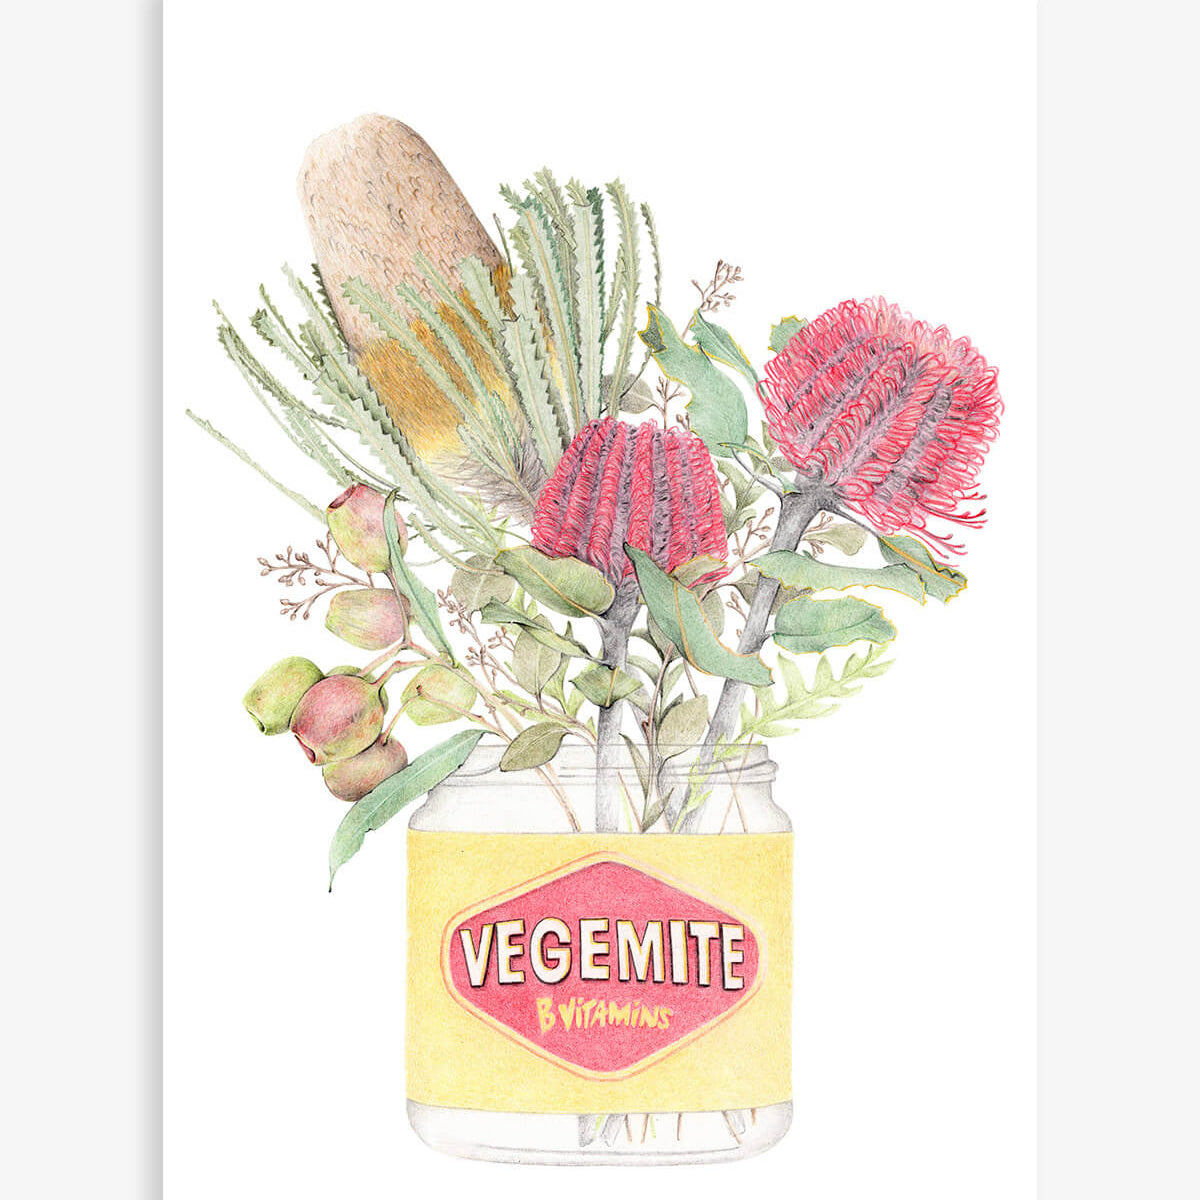 Vegemite with native Australian botanical print